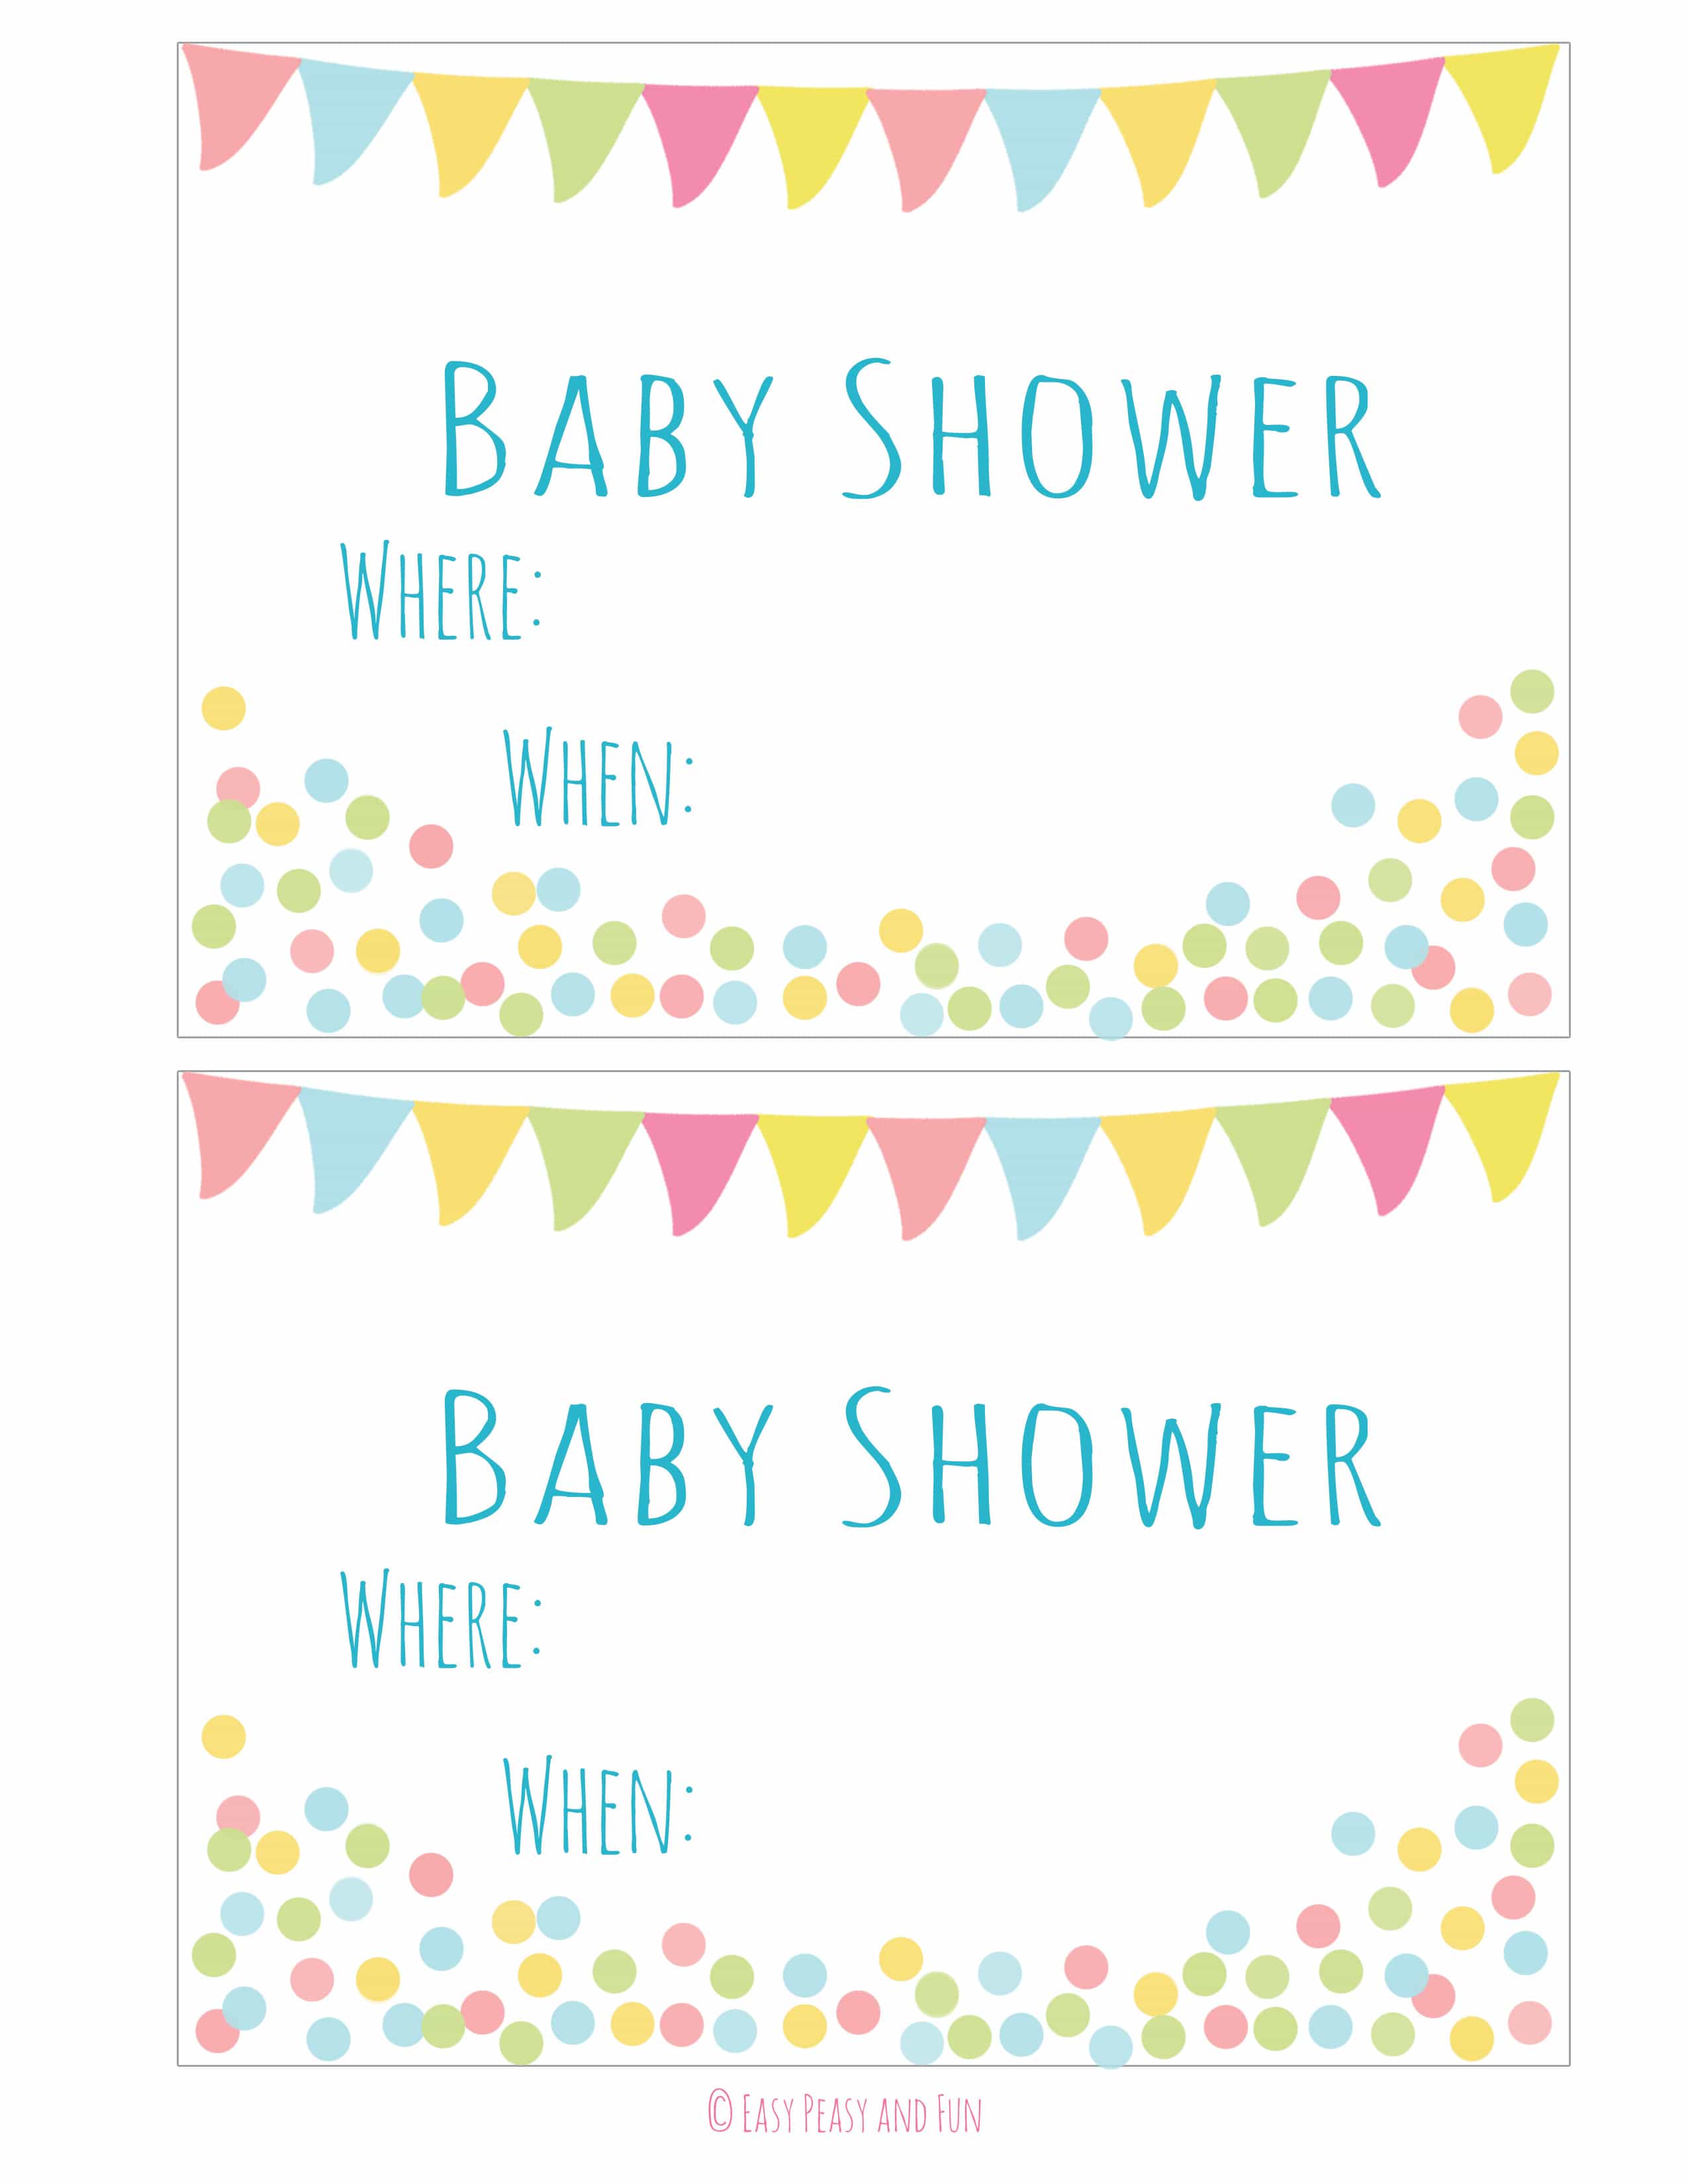 Baby Shower Invitations blue jpg 2 550 3 300 Pixels Baby Shower 